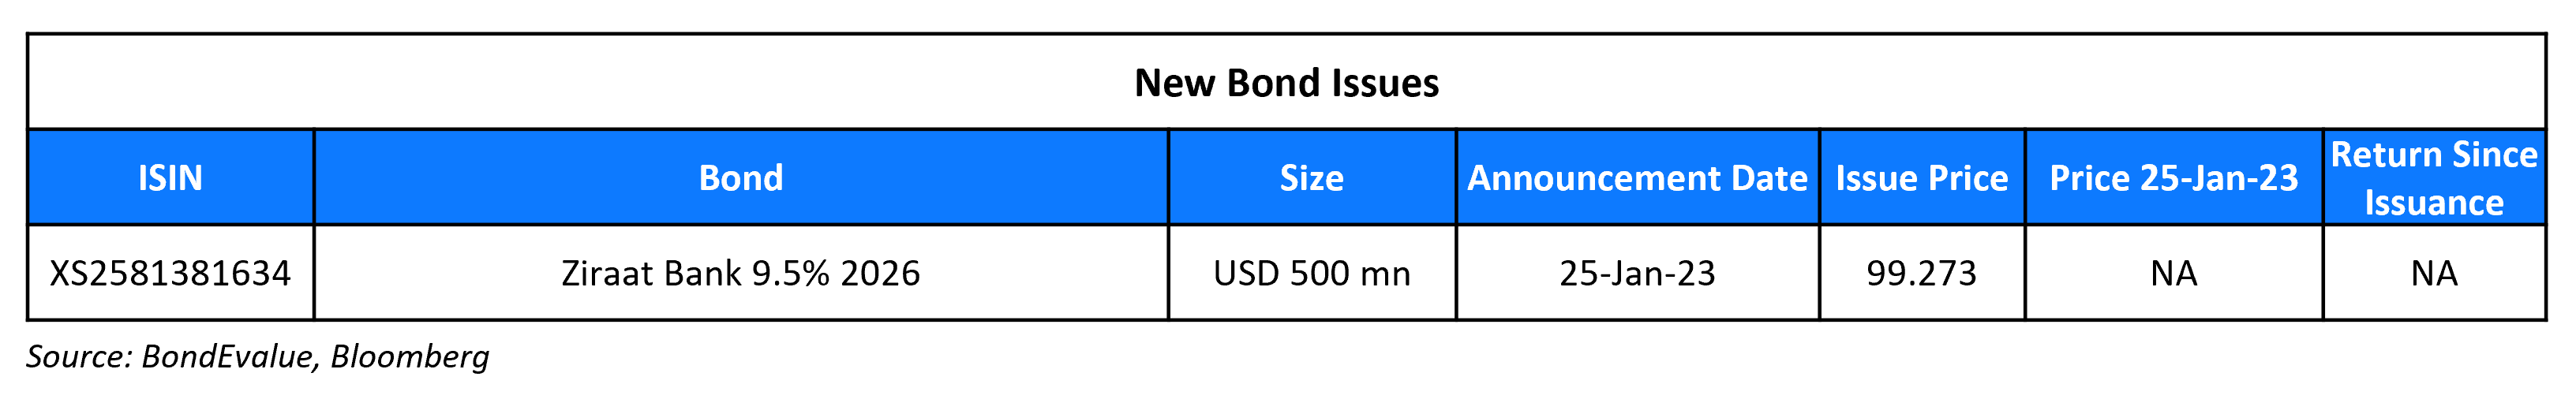 New Bond Issues 26 Jan 23